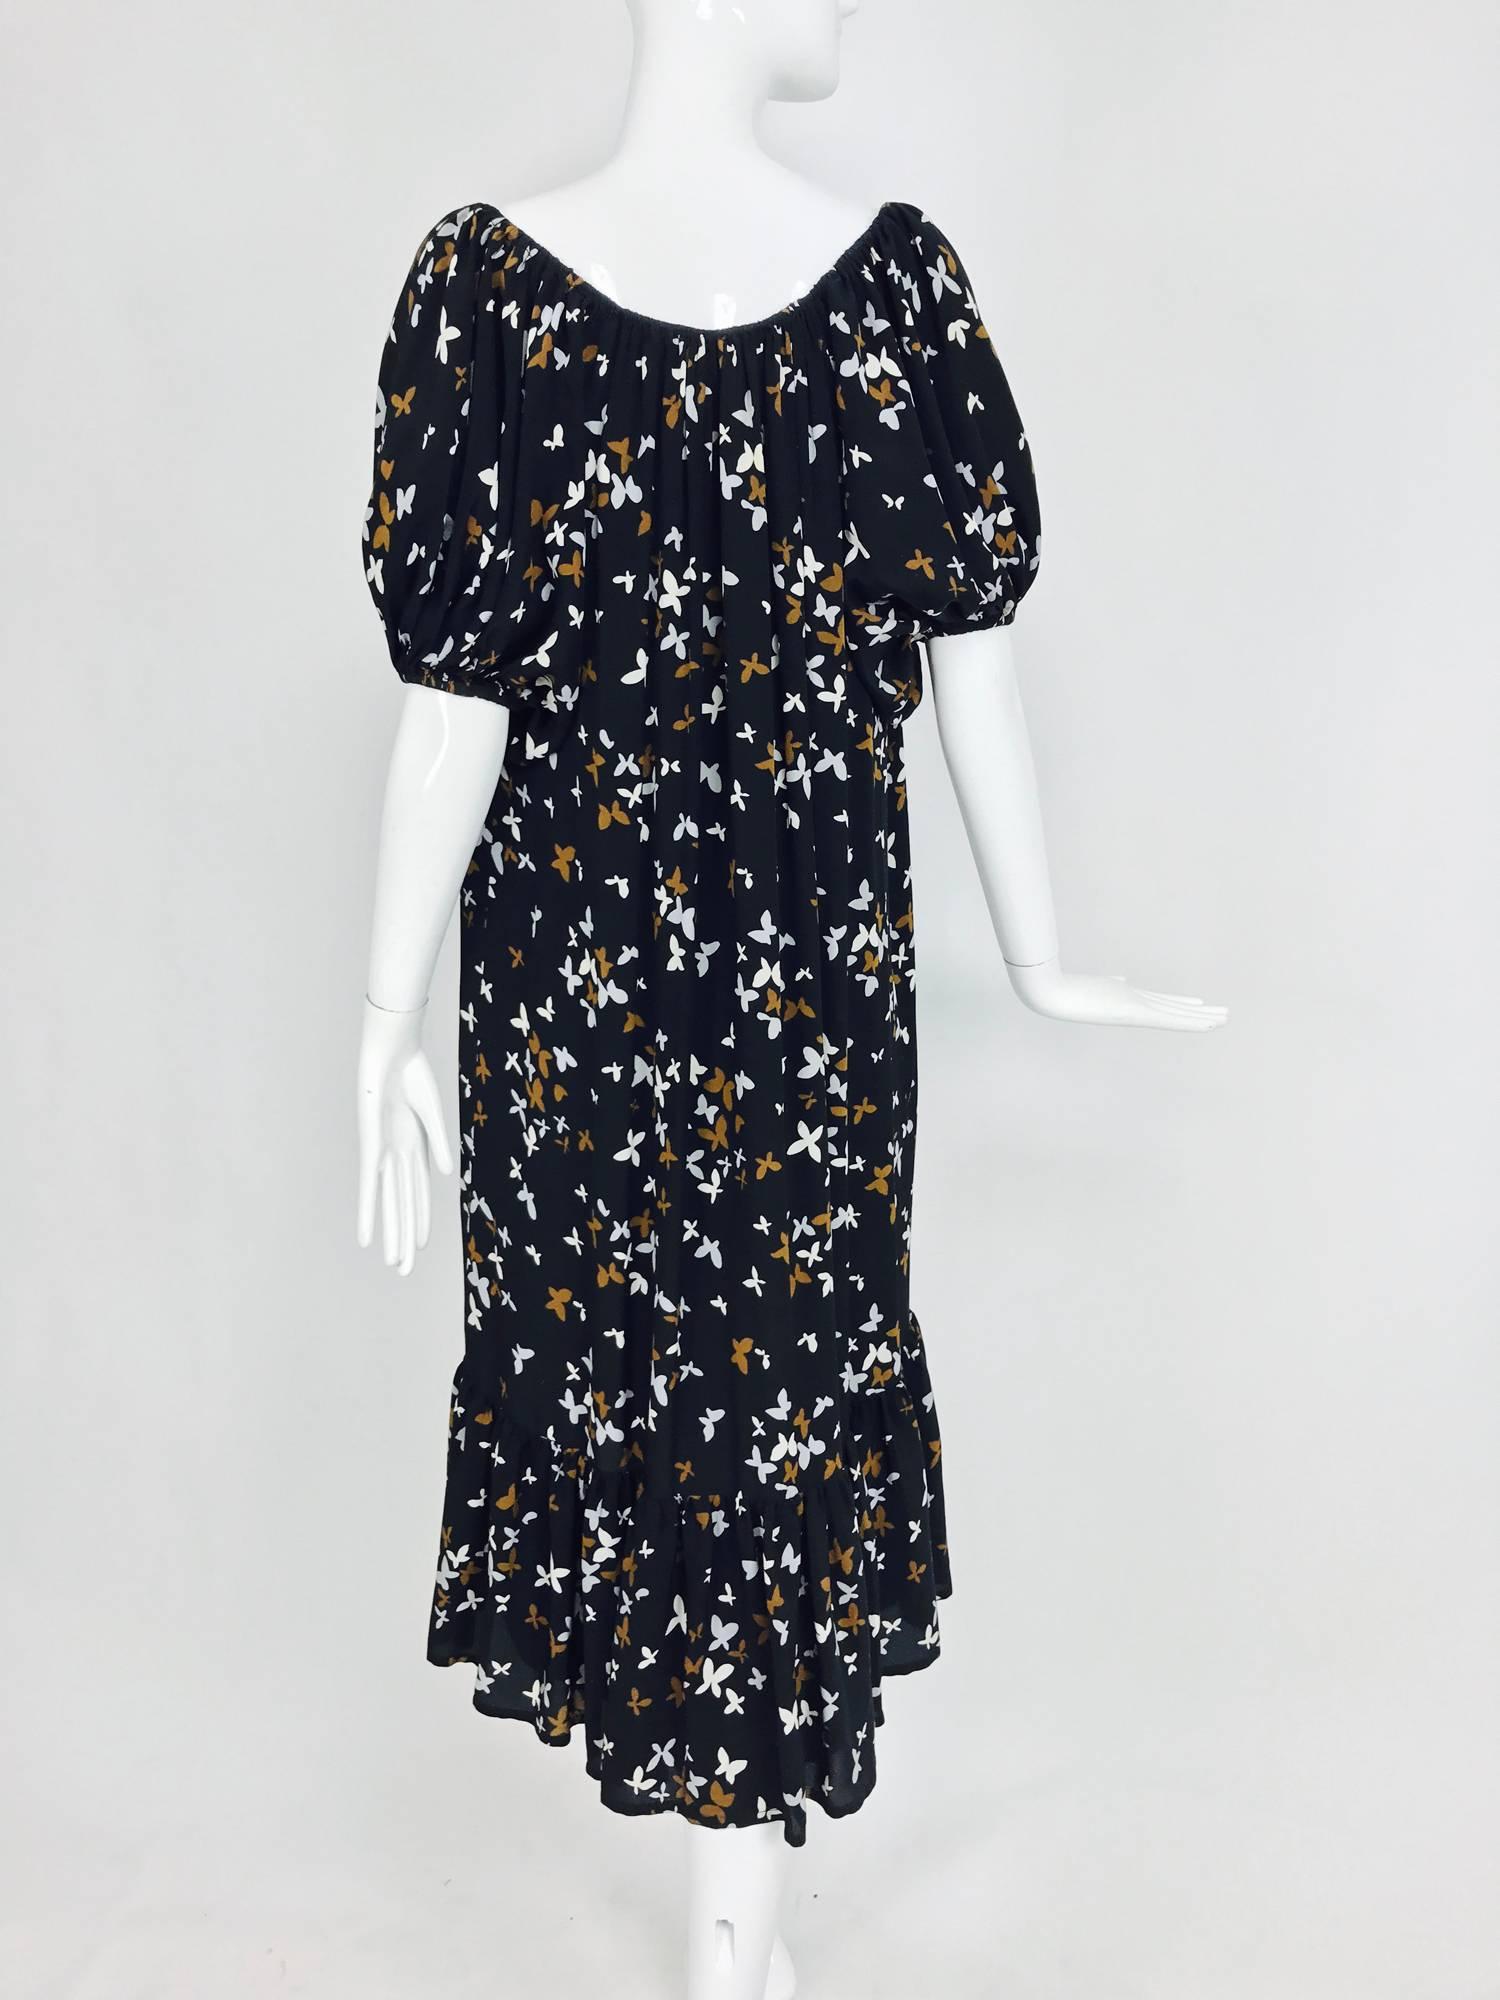 Documented Yves Saint laurent butterfly print silk peasant dress 1978 2